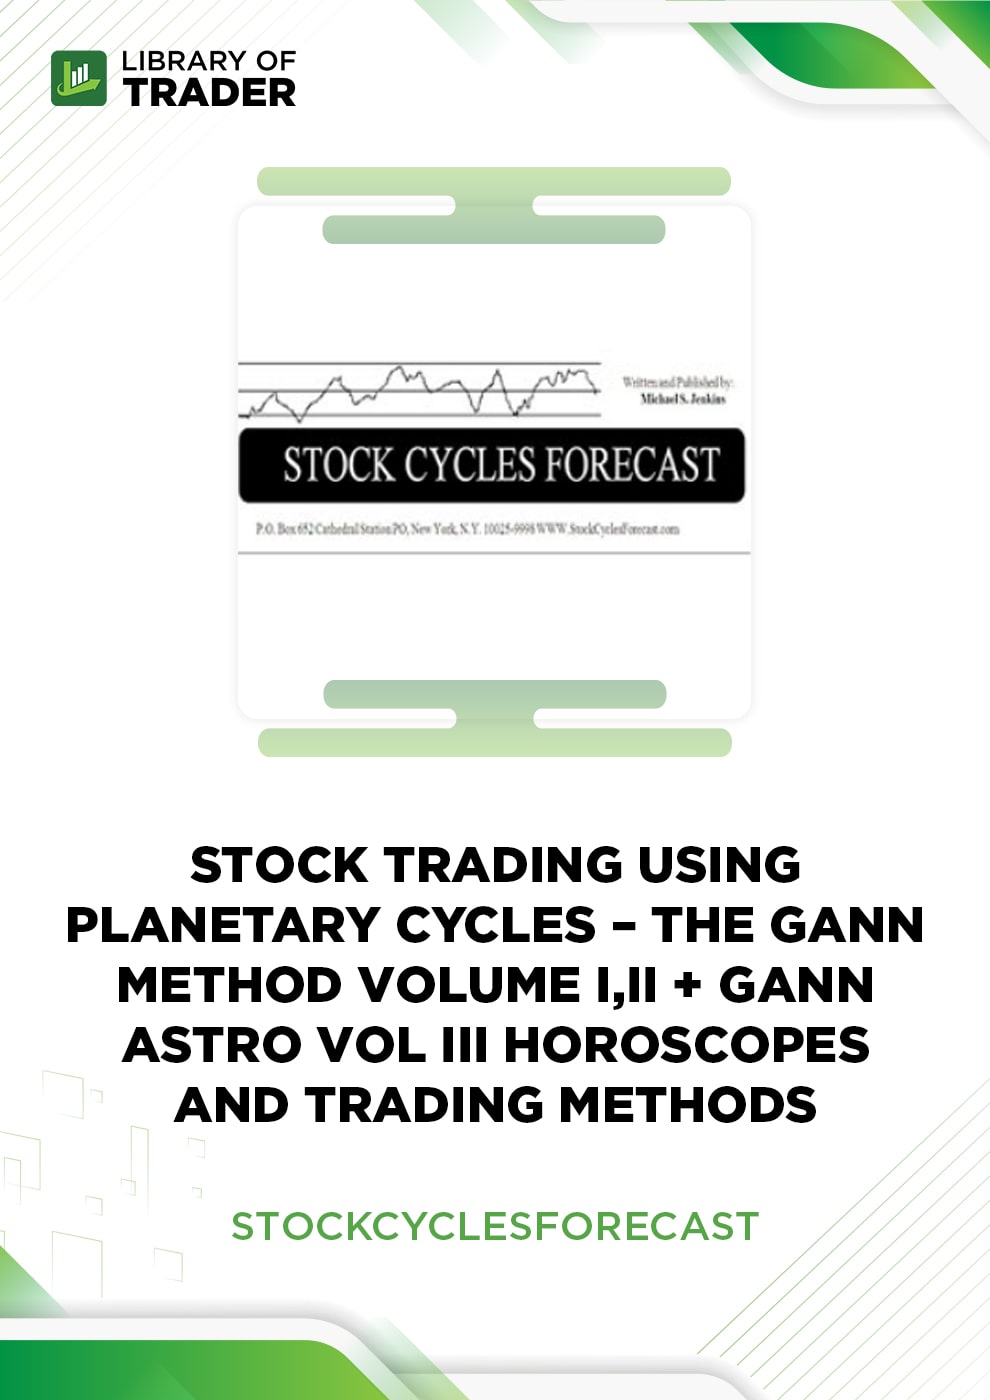 Stock Trading Using Planetary Cycles: The Gann Method, Gann Astro Vol and Trading Methods